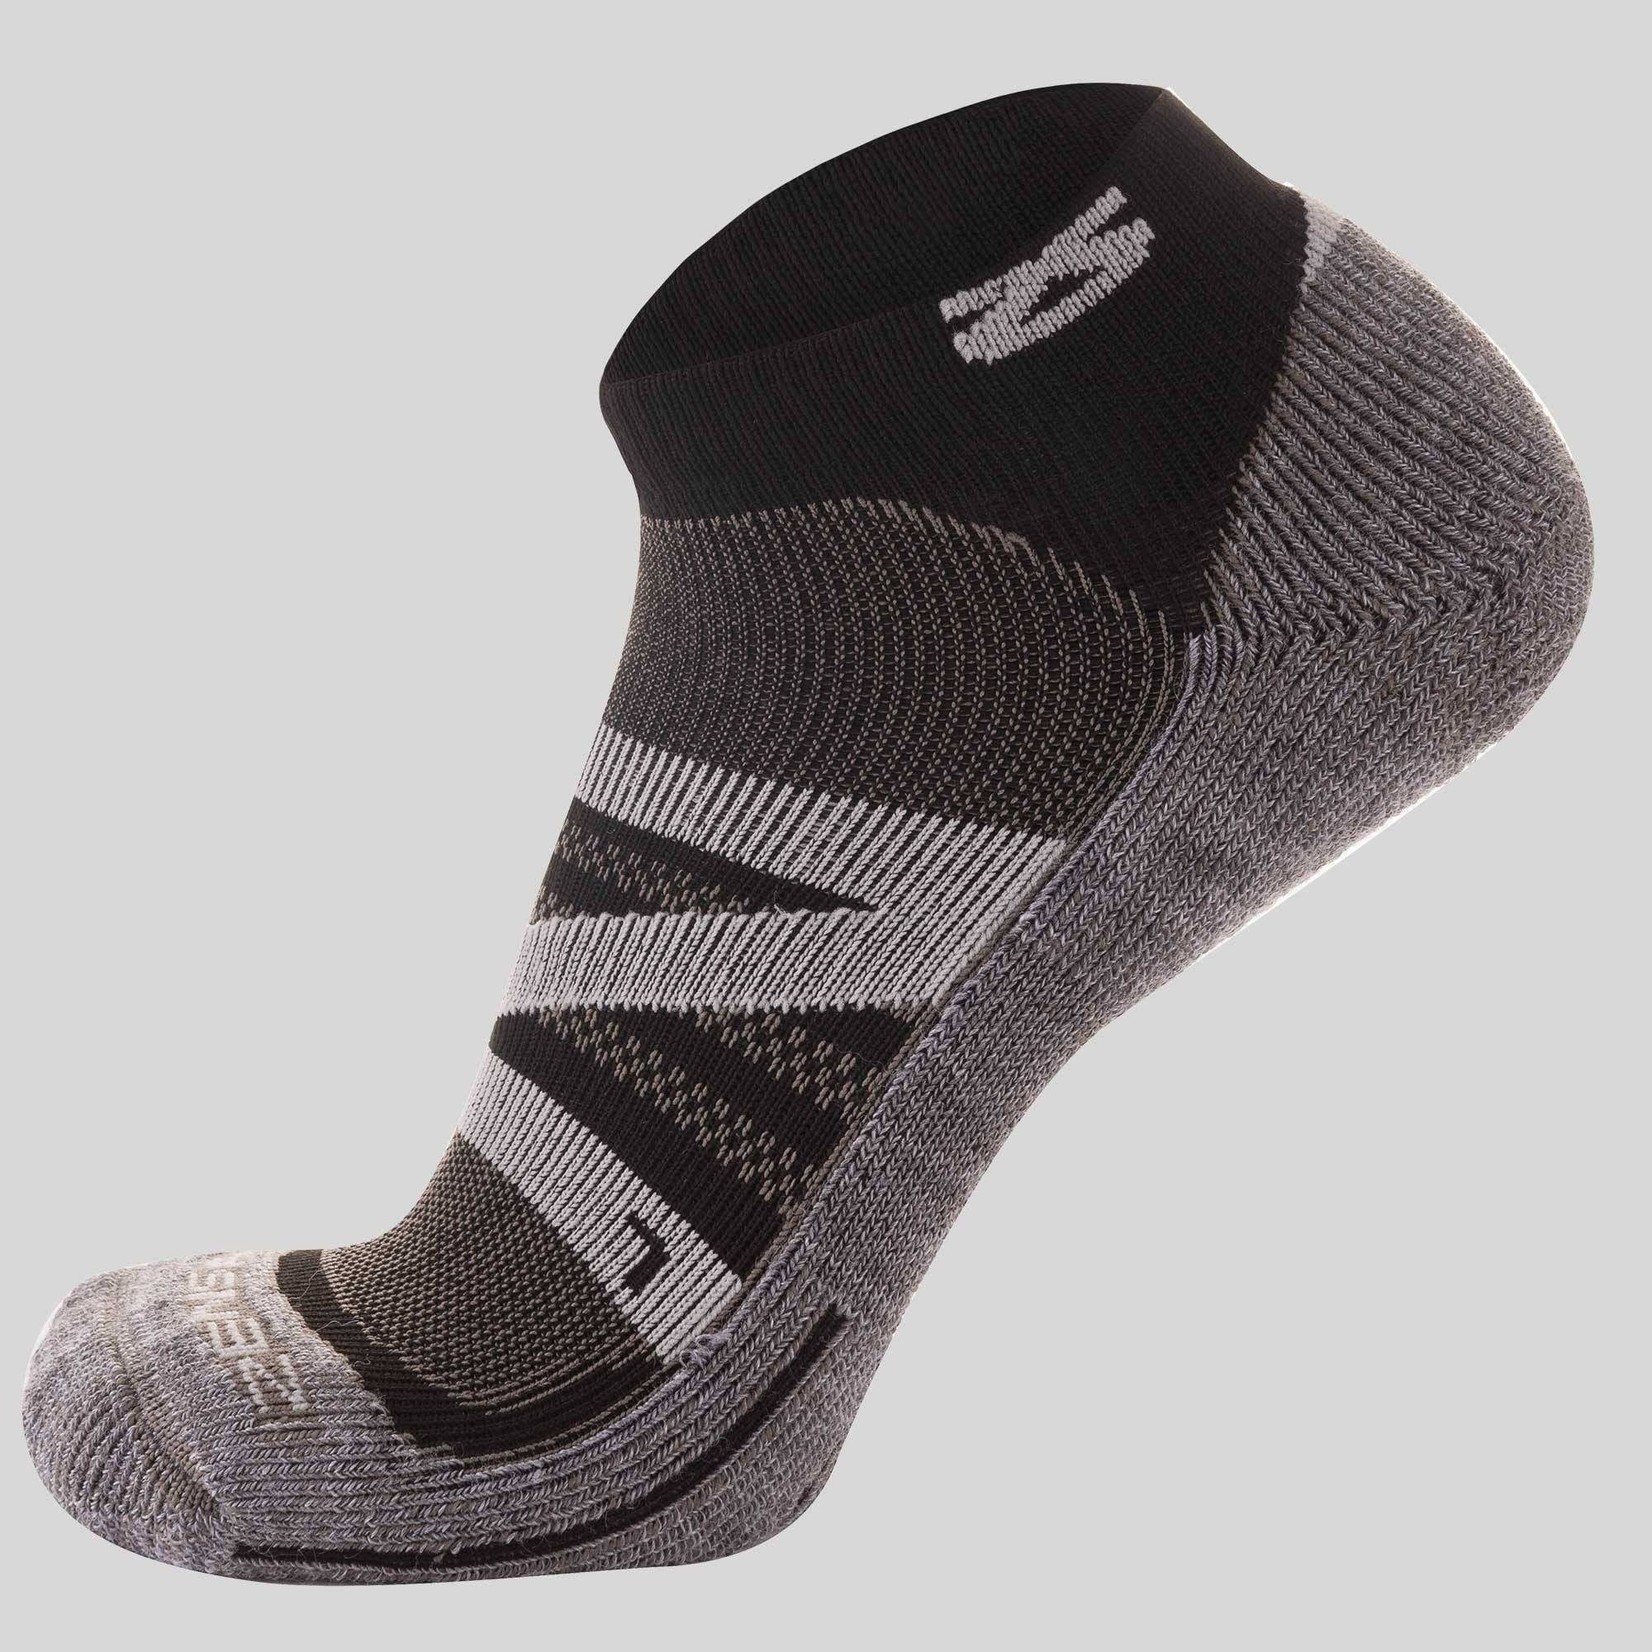 Zensah Zensah Wool Running Socks